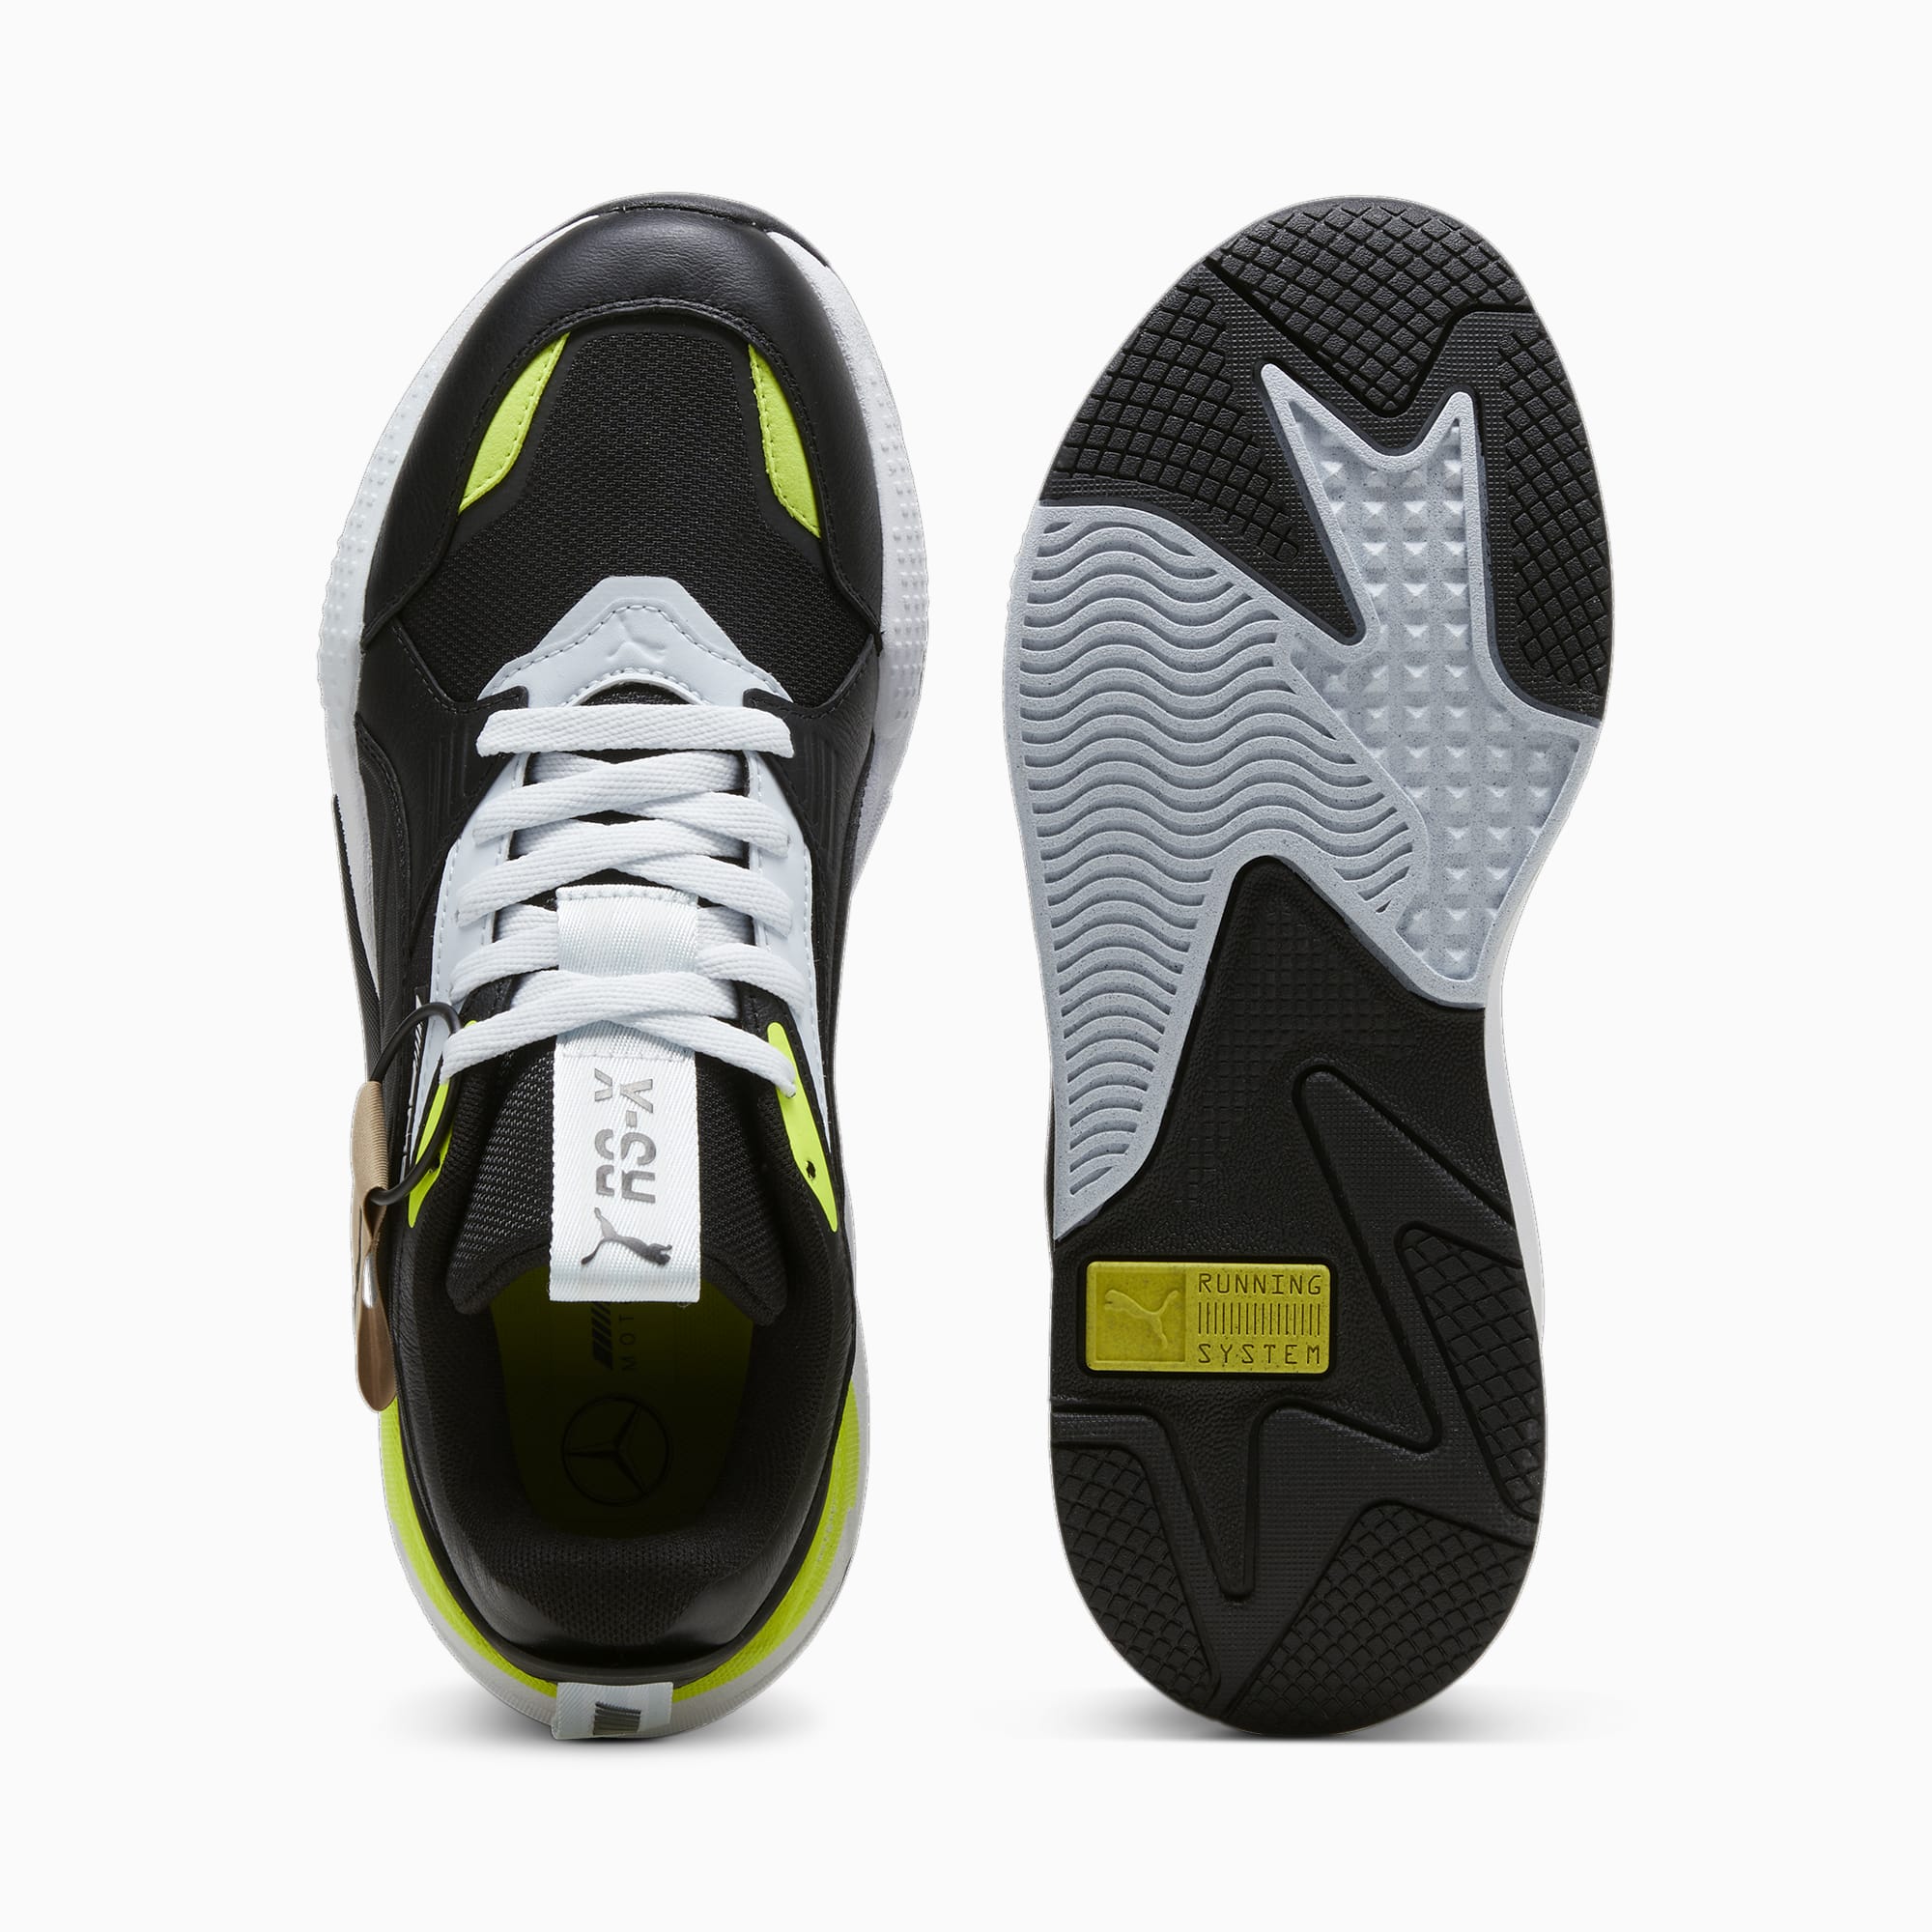 PUMA AMG RS-X T Sneakers Schuhe, Schwarz/Blau/Grün, Größe: 41, Schuhe